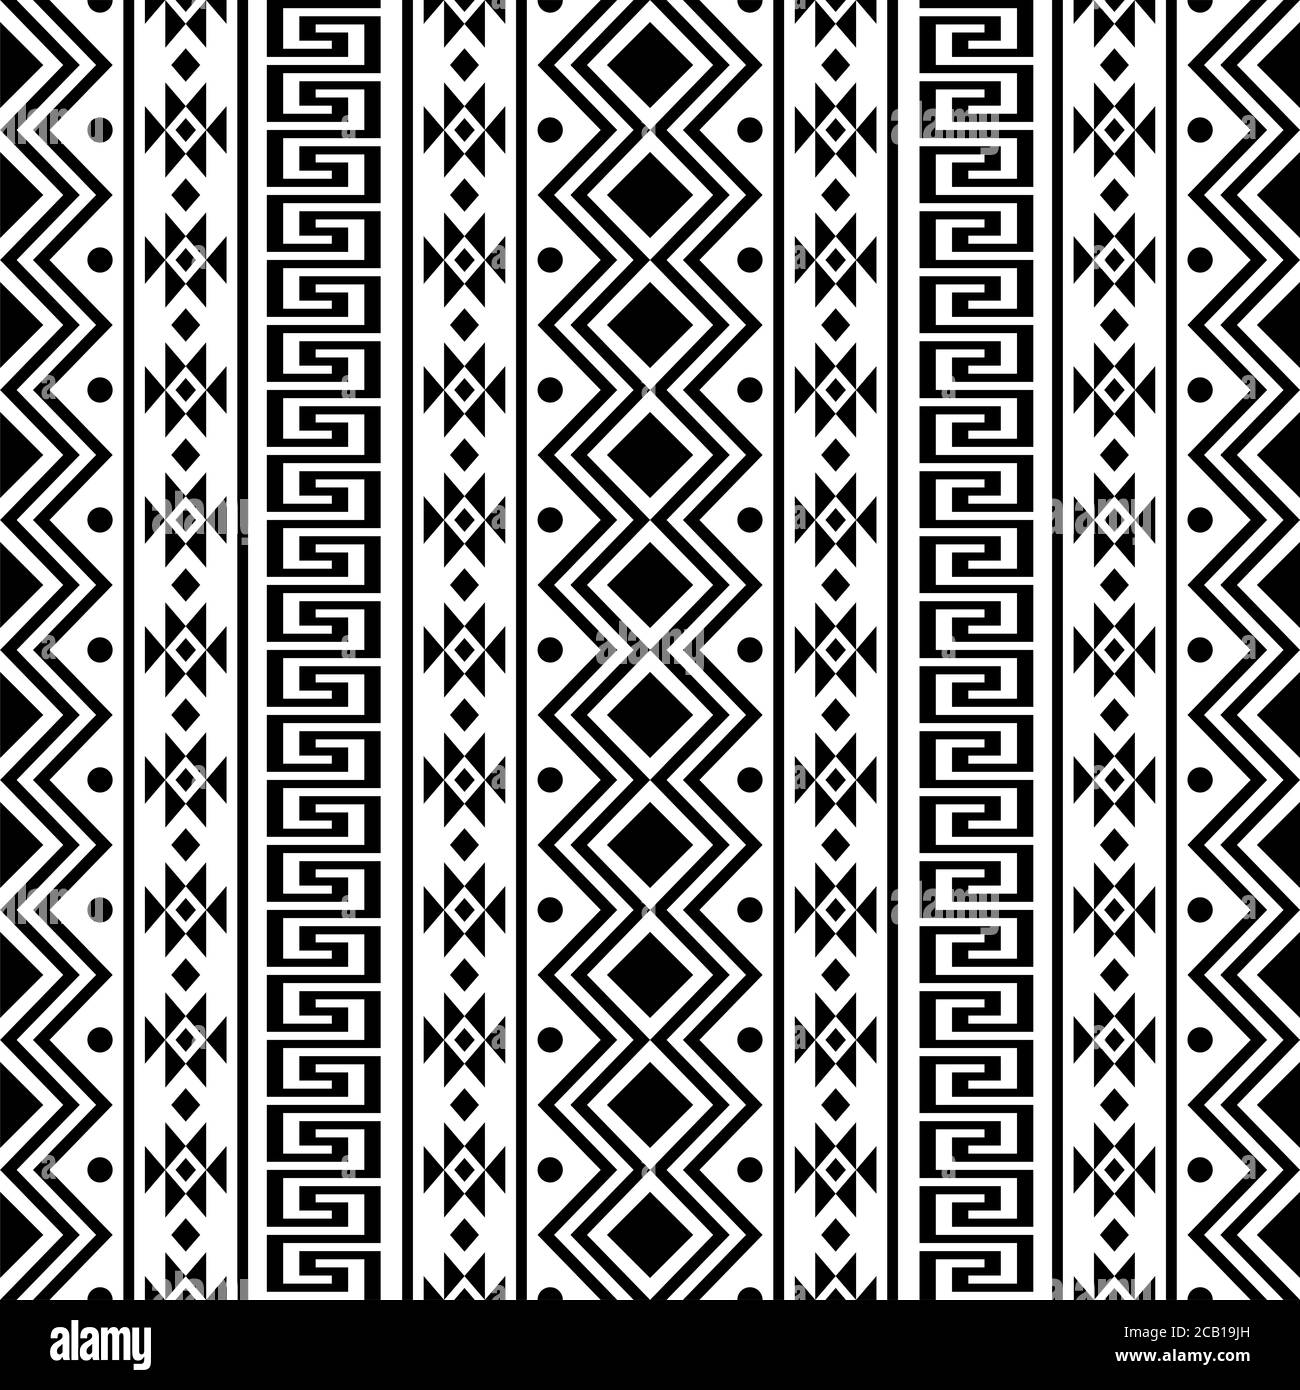 tribal ethnic pattern motif texture background design in black white ...